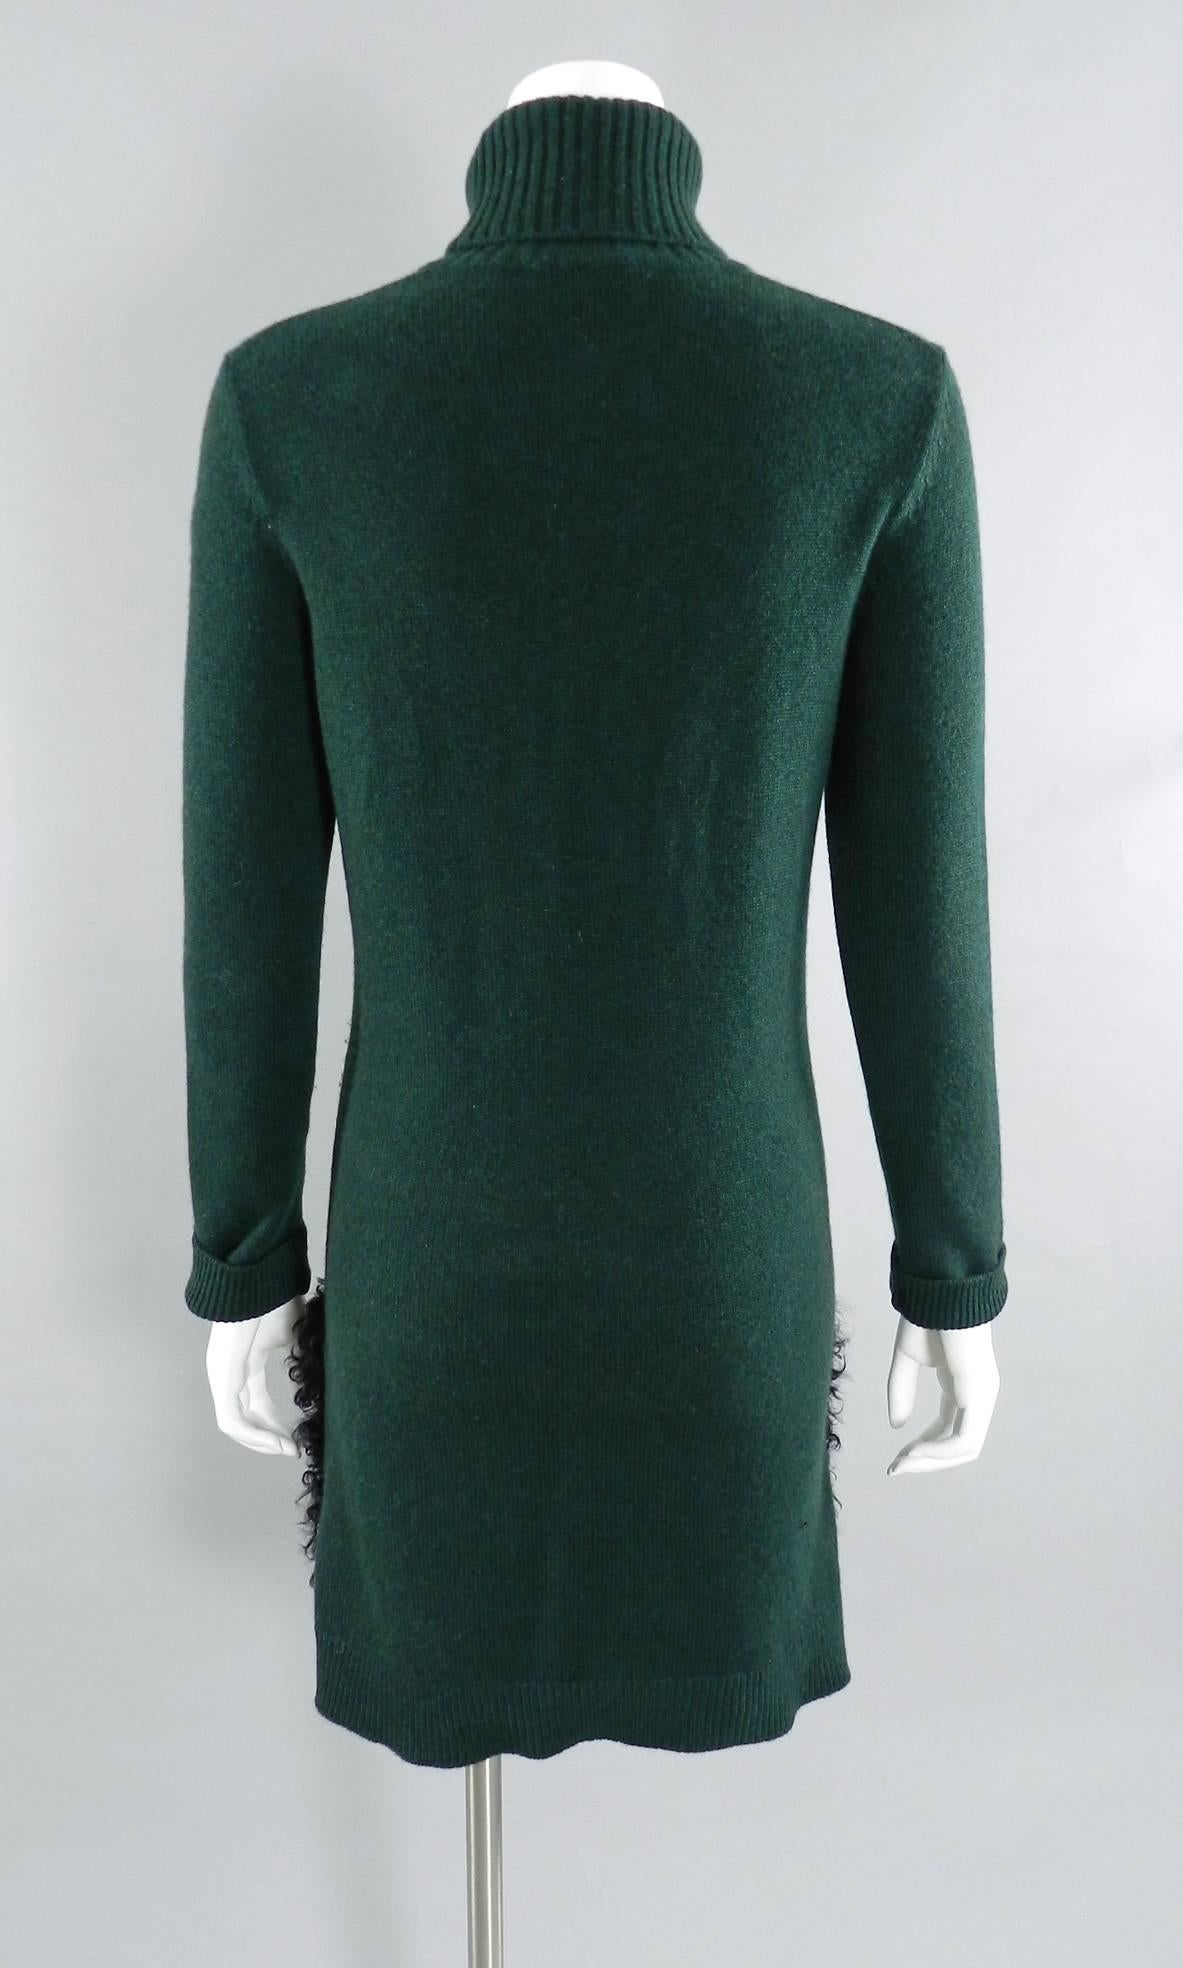 Black Louis Vuitton Pre-Fall 2014 Green Cashmere Sweater Dress with Lamb Fur Trim